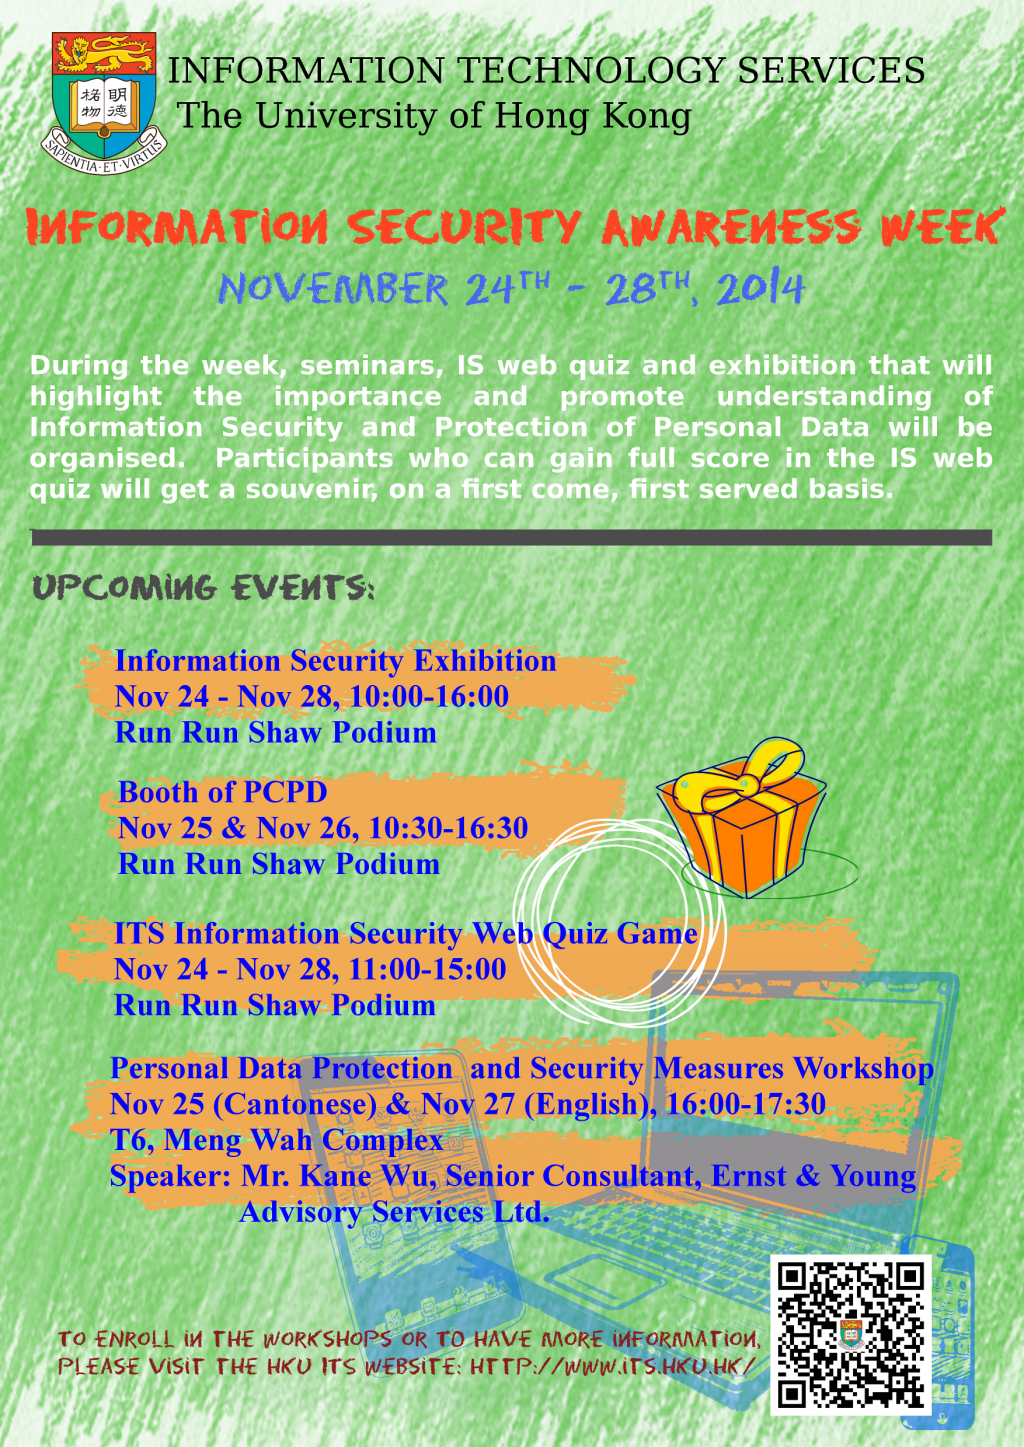 Information Security Awareness Week 2014